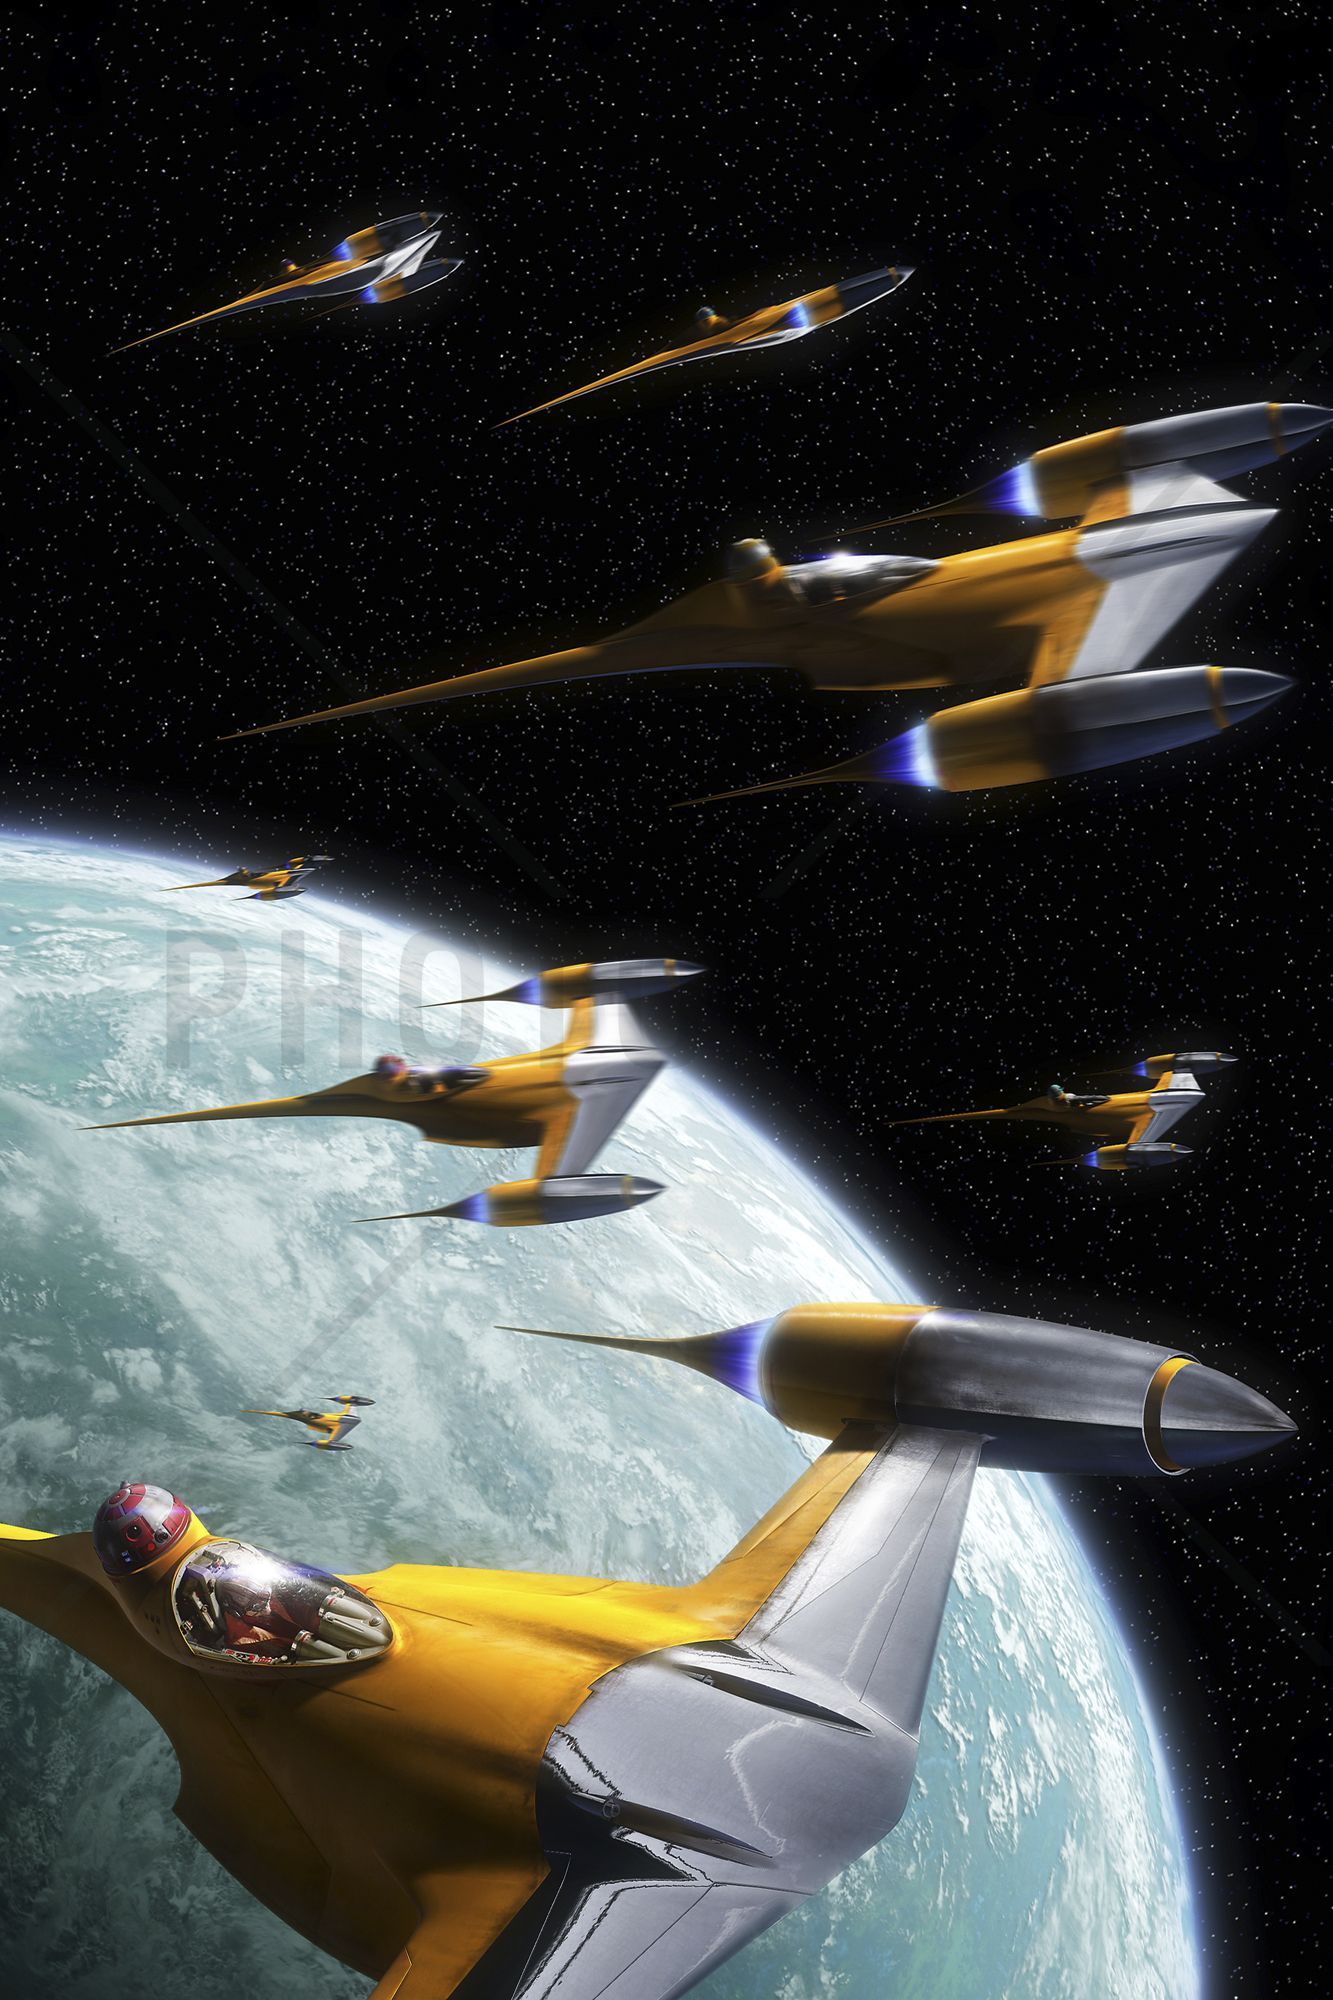 Star Wars Starfighters 2 Mural & Photo Wallpaper. Star wars image, Star wars ships, Star wars vehicles